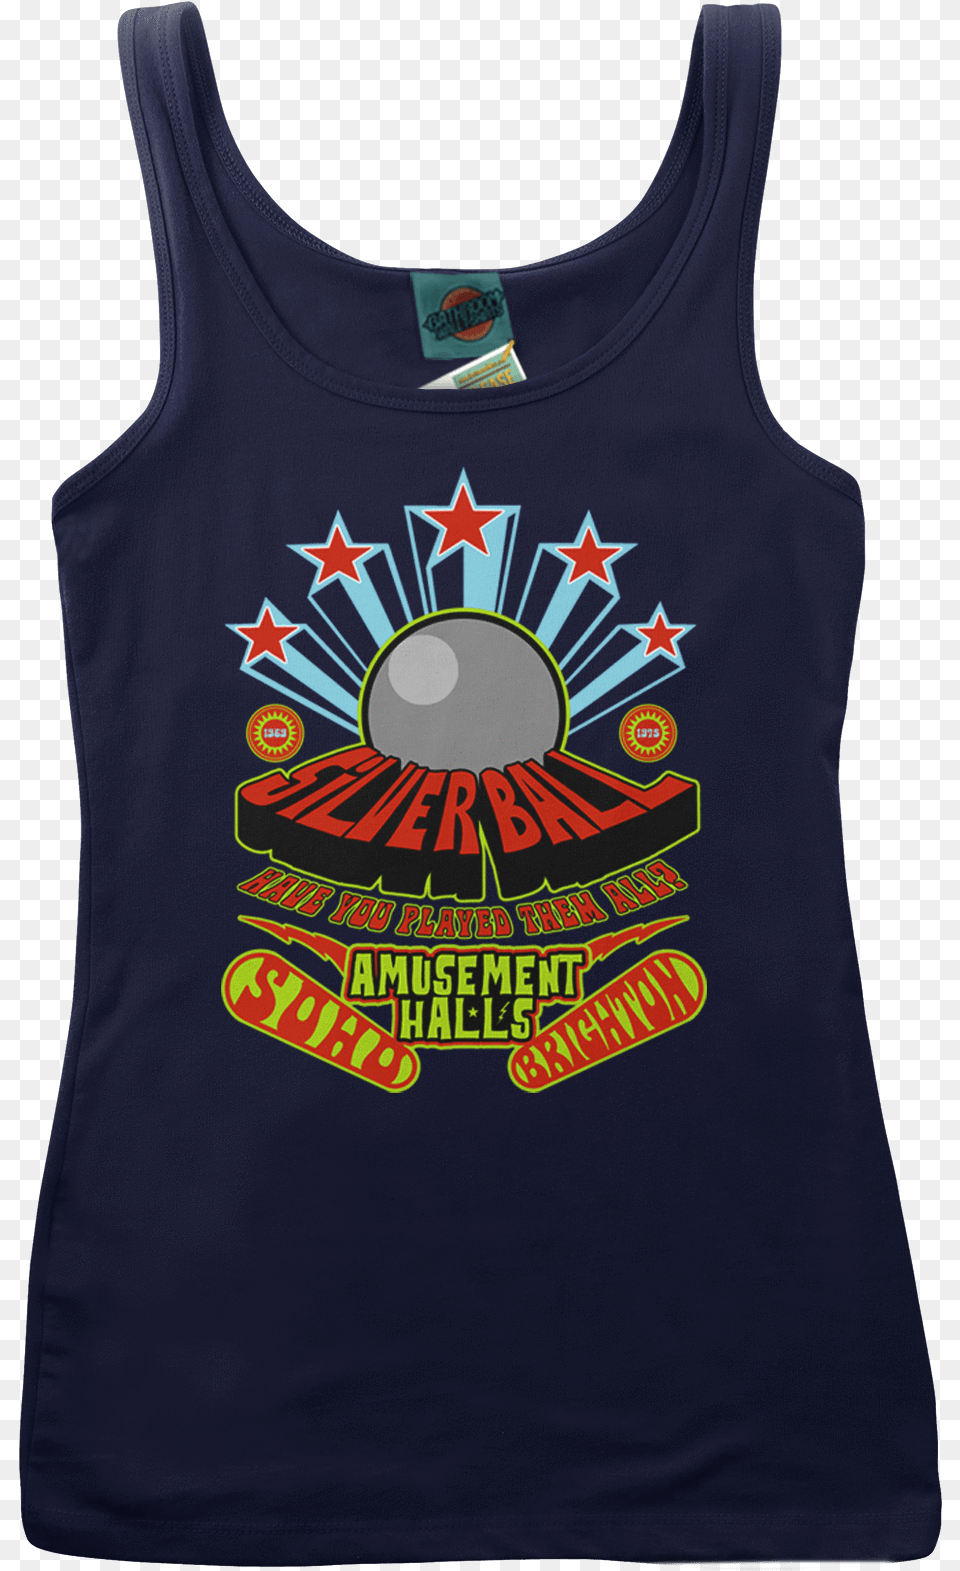 Who Inspired Pinball Wizard Silver Ball Amusement Hall Shirt, Clothing, Tank Top Free Png Download